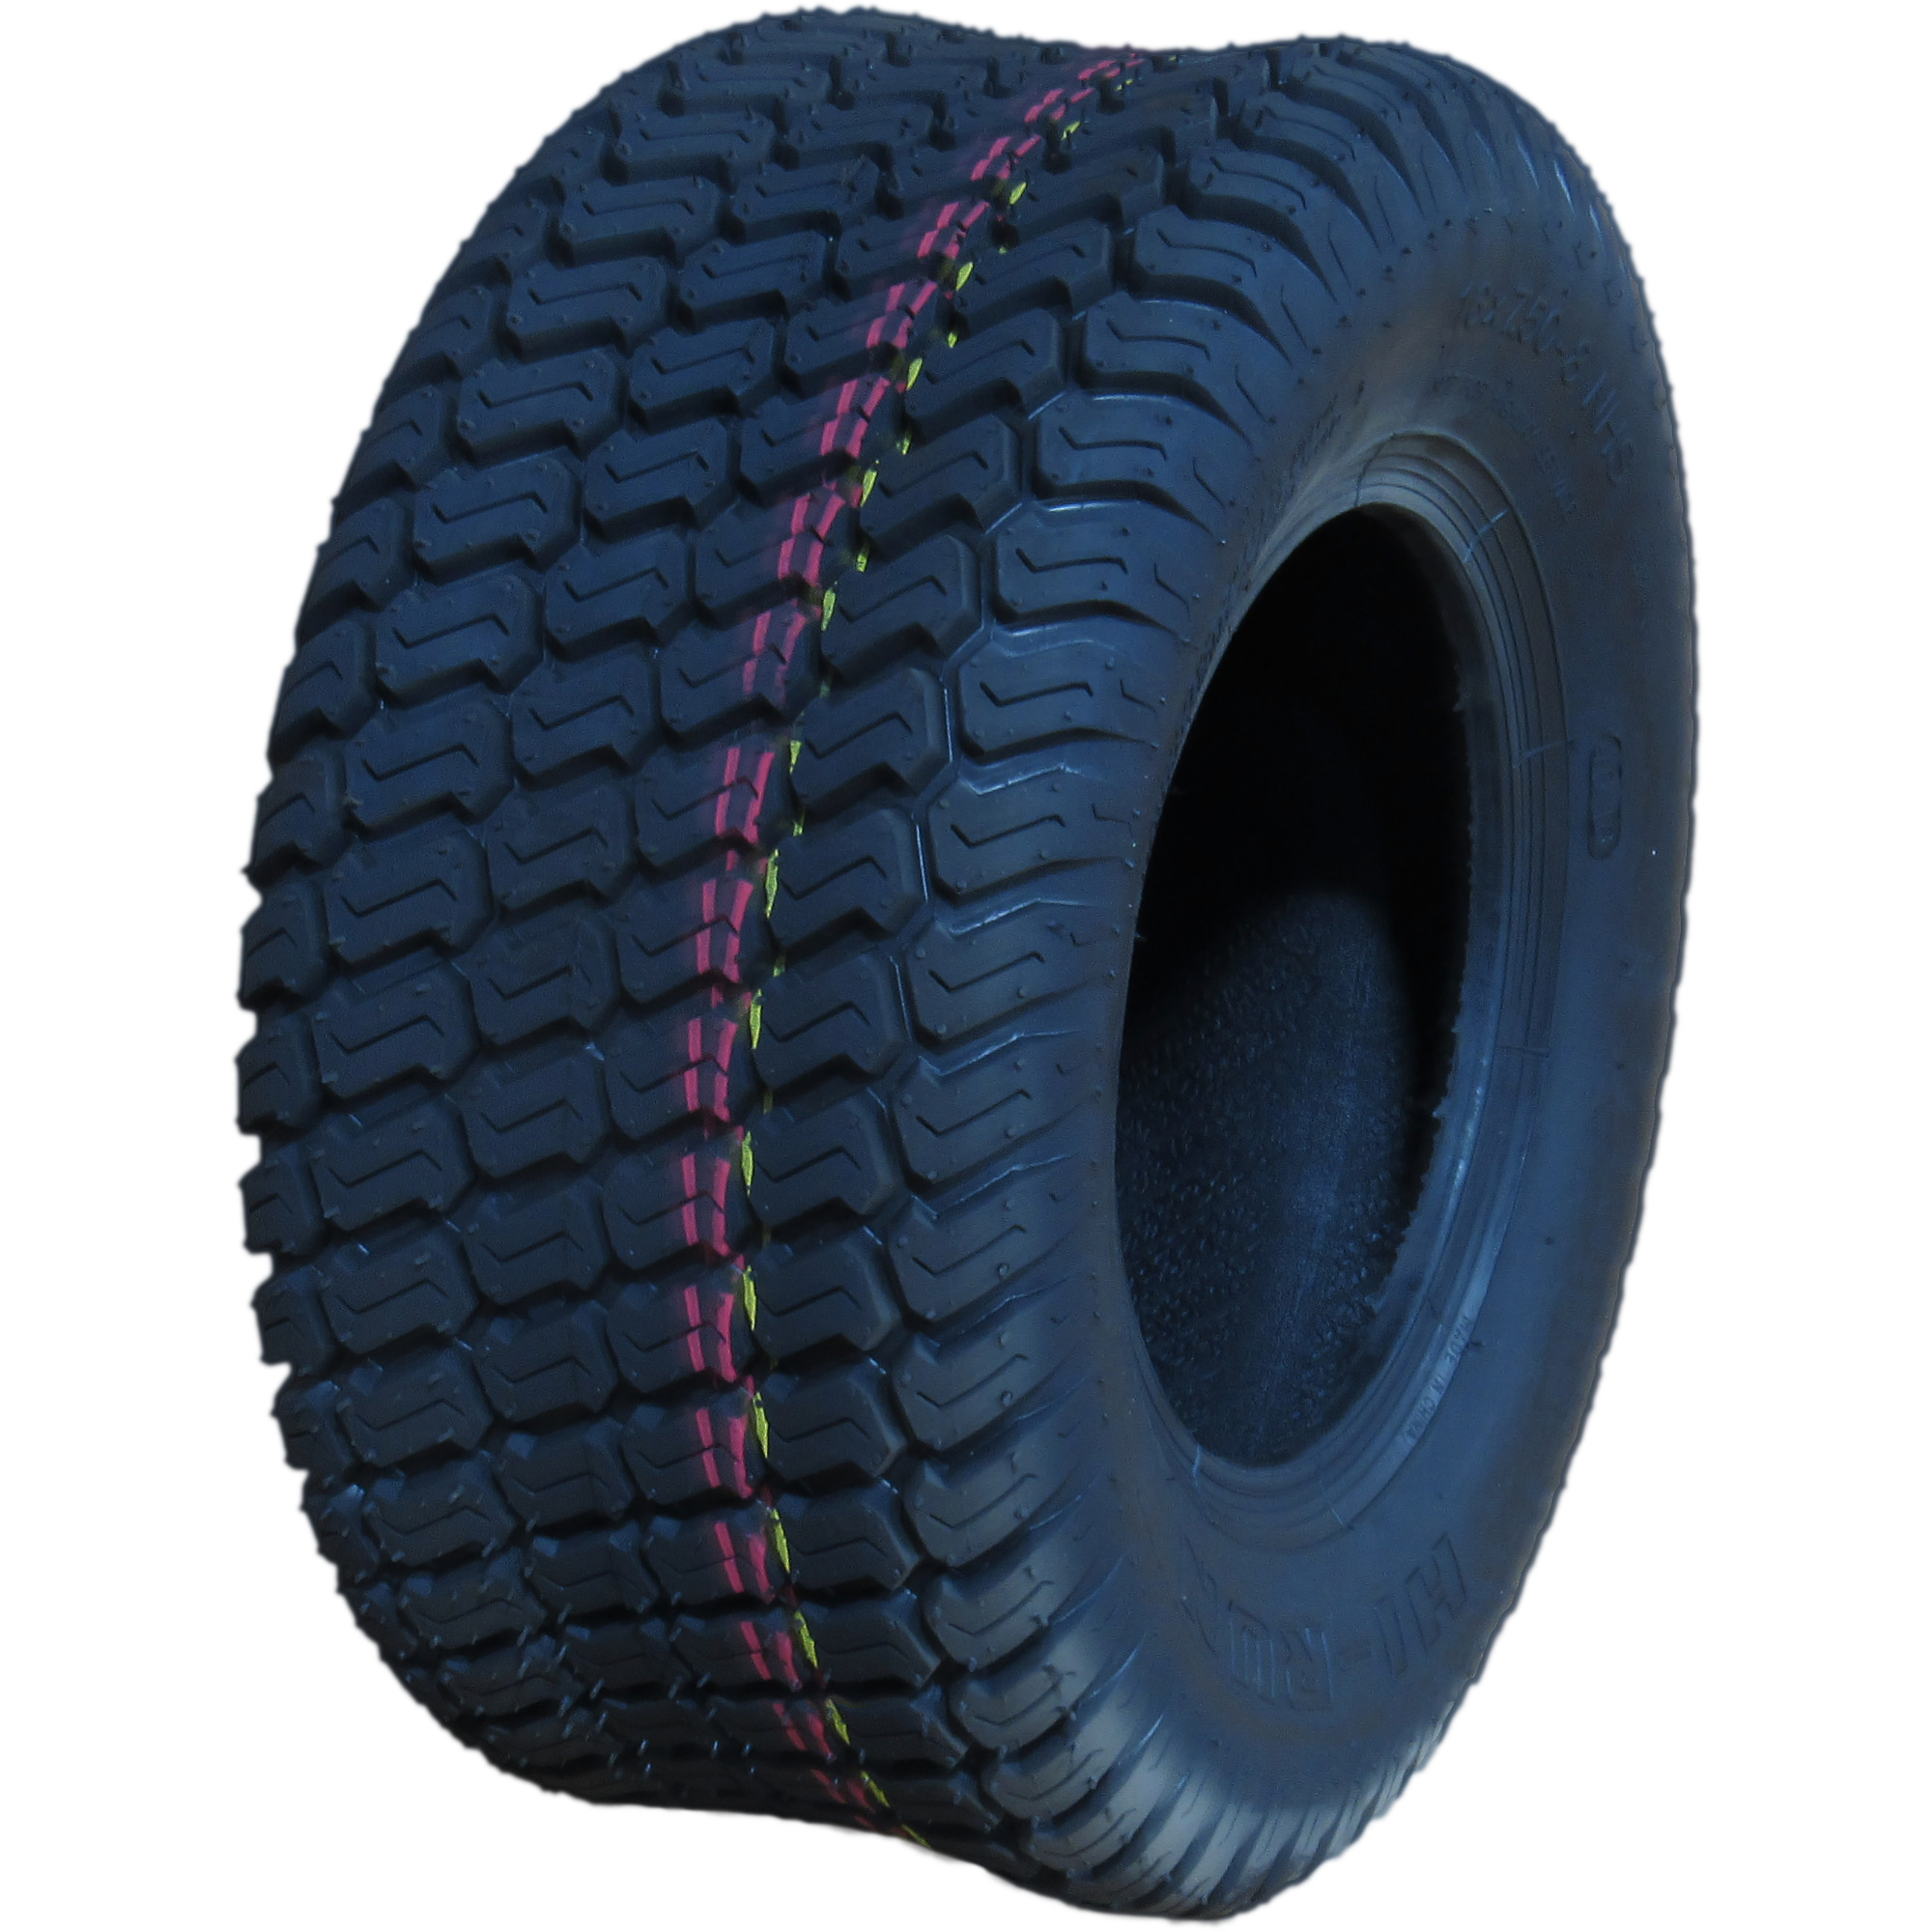 HI-RUN, Lawn Garden Tire, SU05 Turf, Tire Size 16X7.50-8 Load Range Rating B, Model WD1128